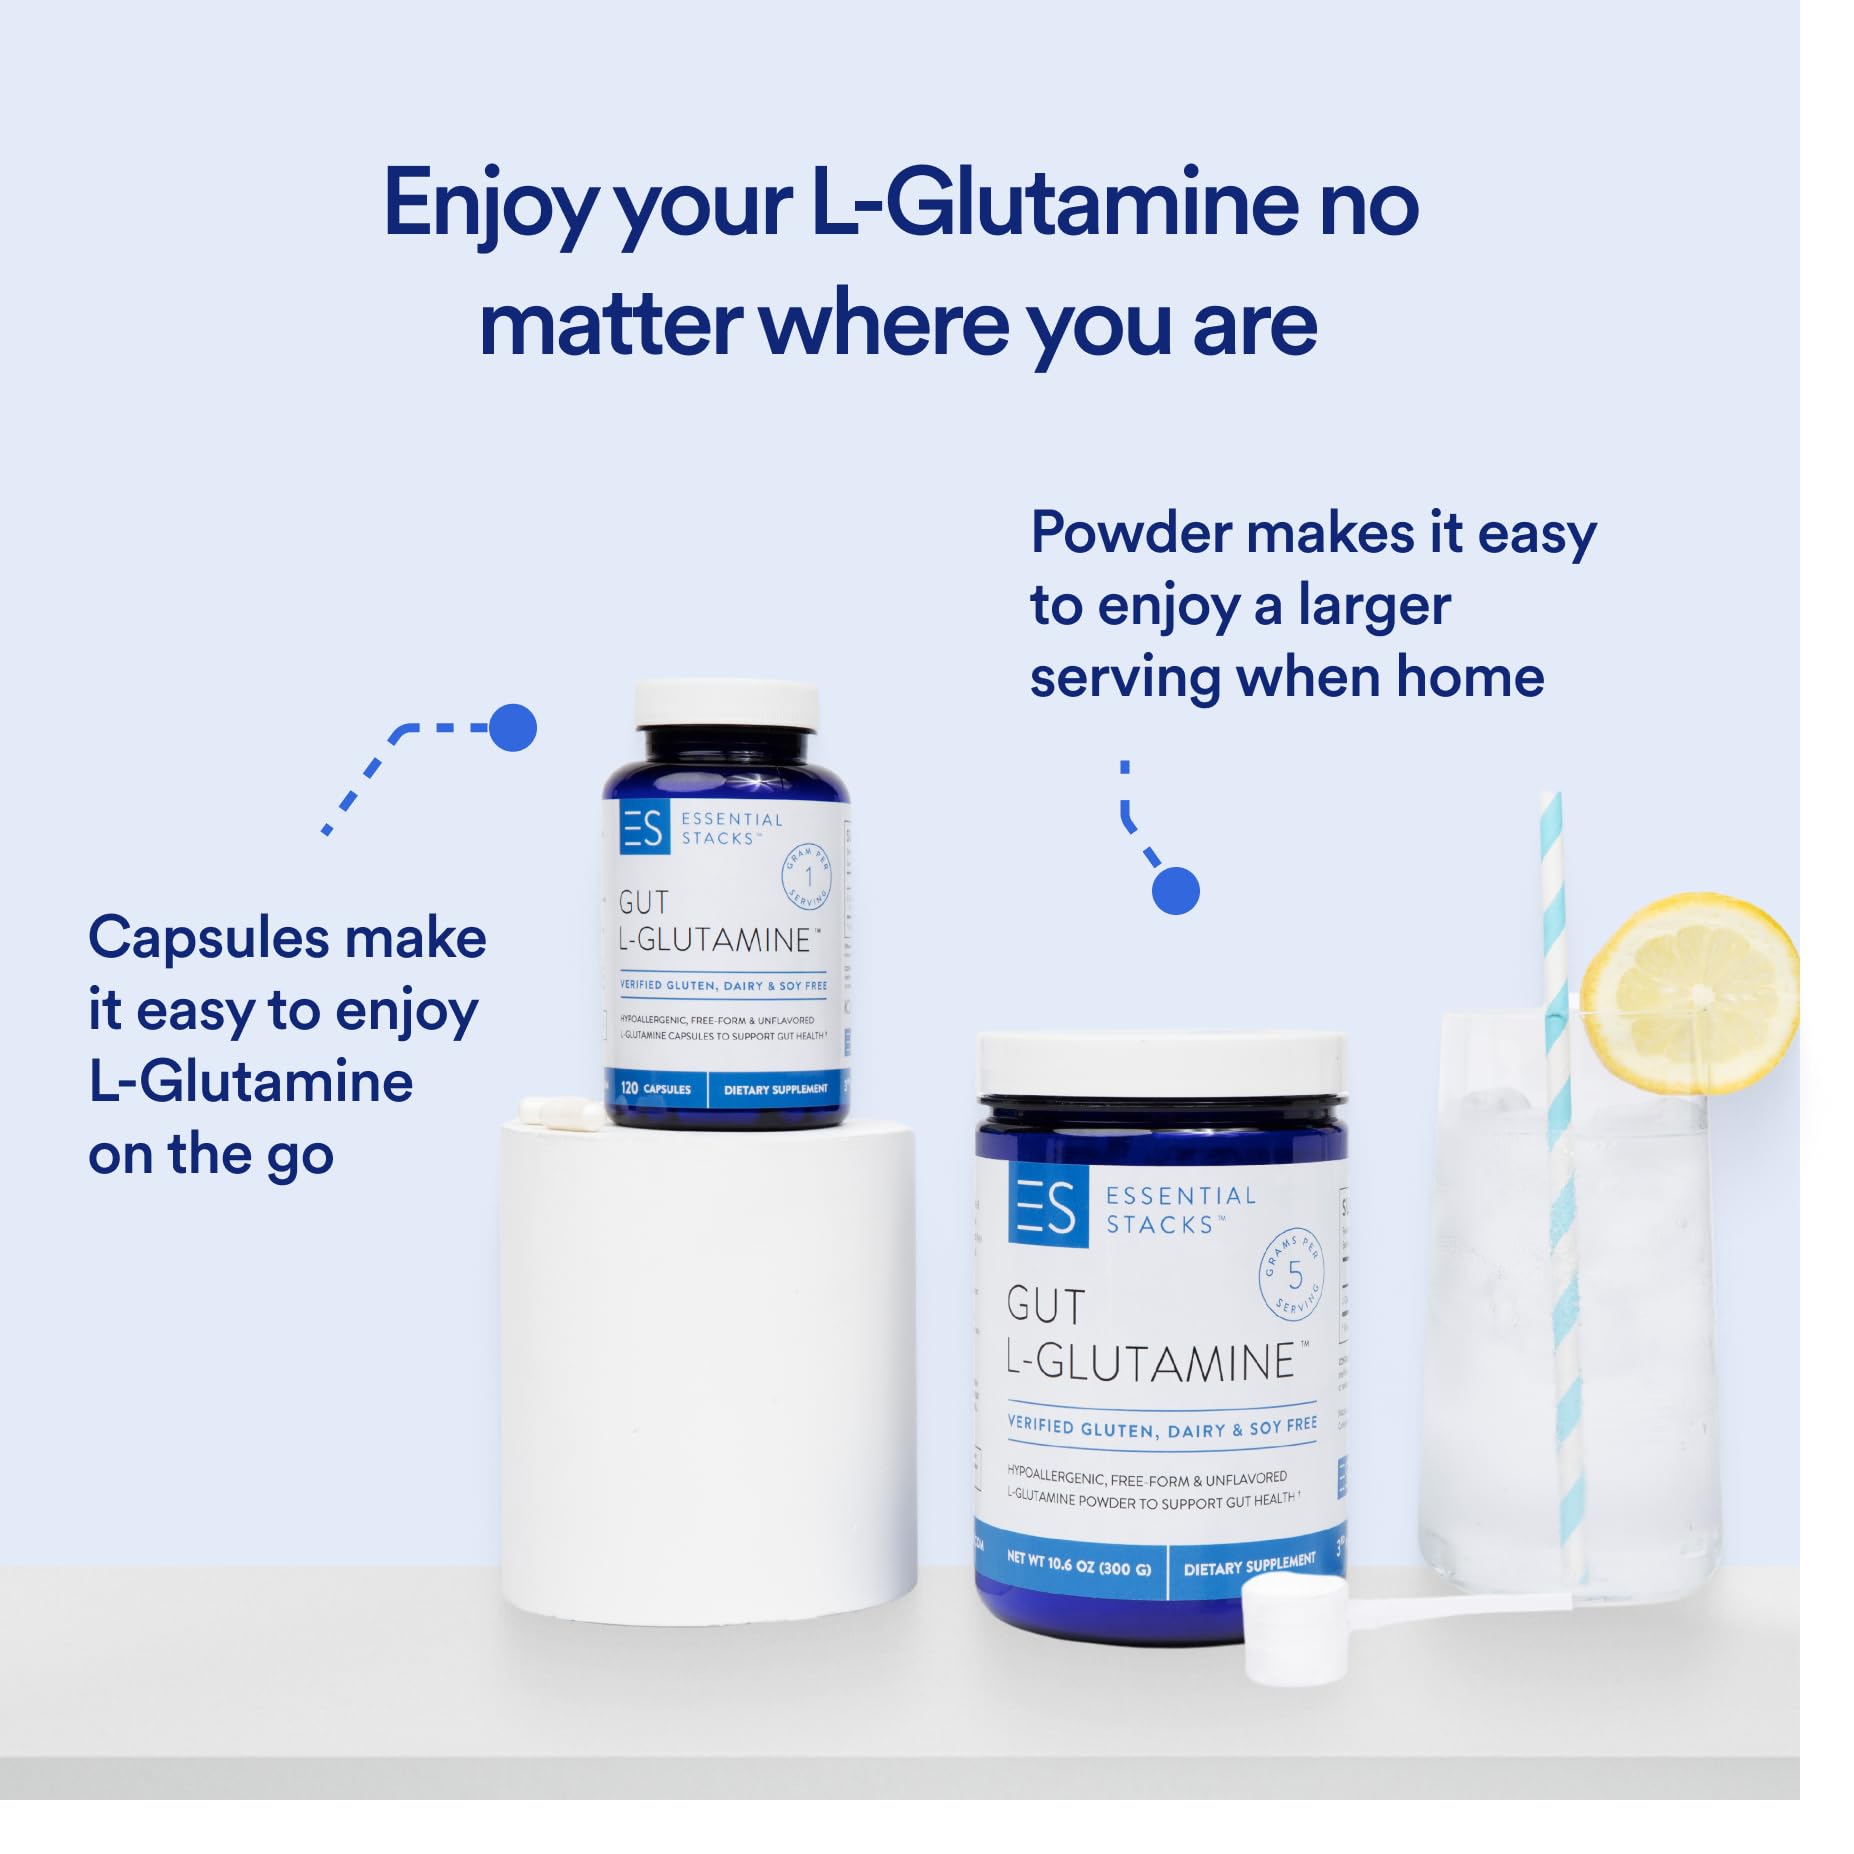 Essential Stacks 3-in-1 Gut L-Glutamine Bundle Powder & Capsules